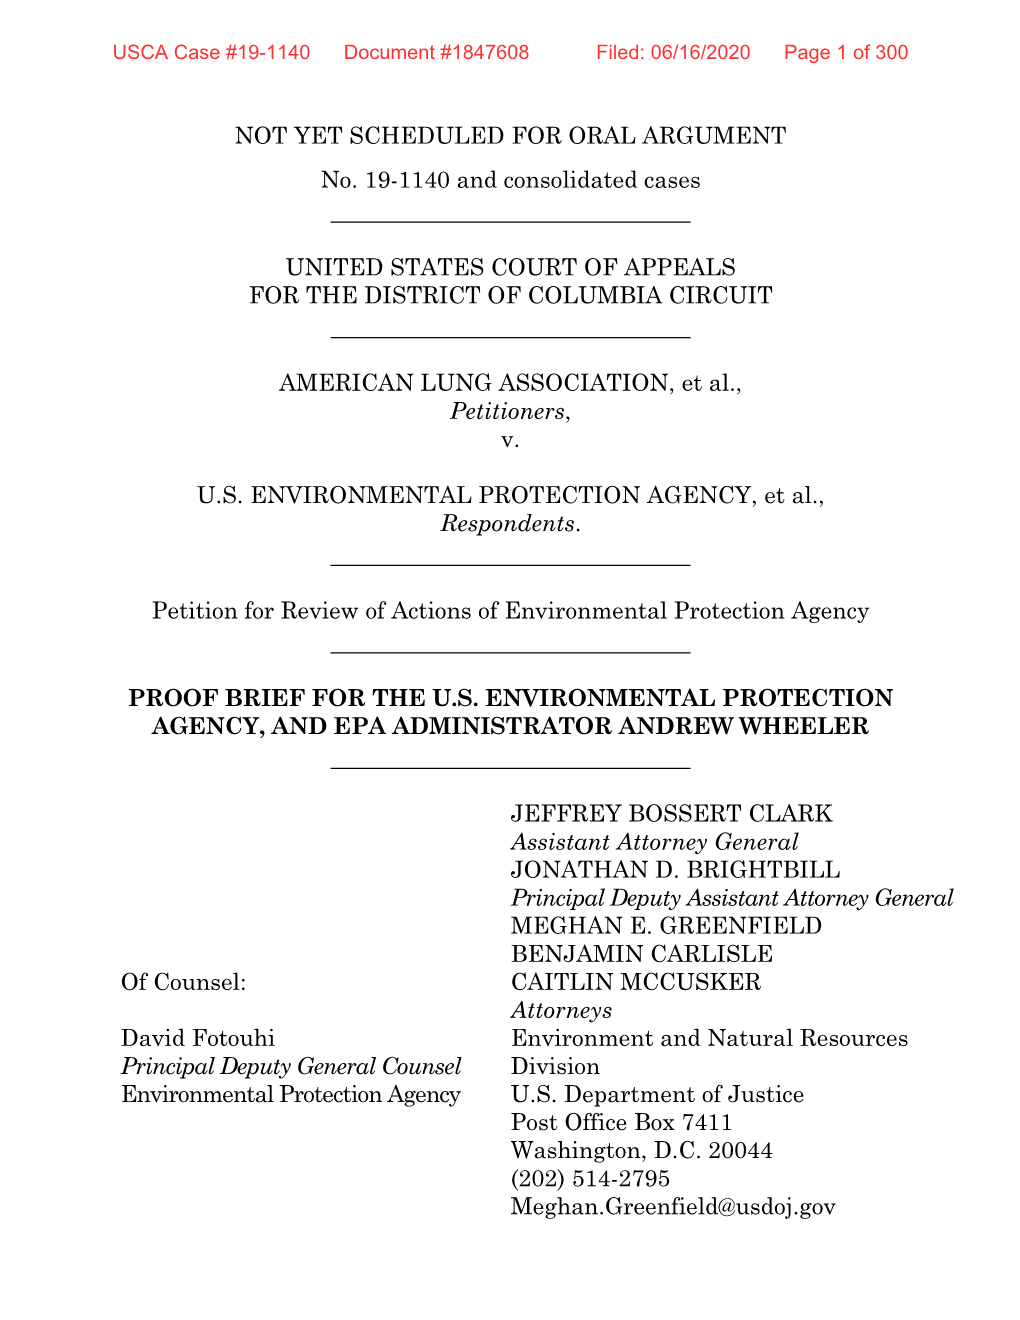 EPA, Response Brief, June 16, 2020 [PDF]